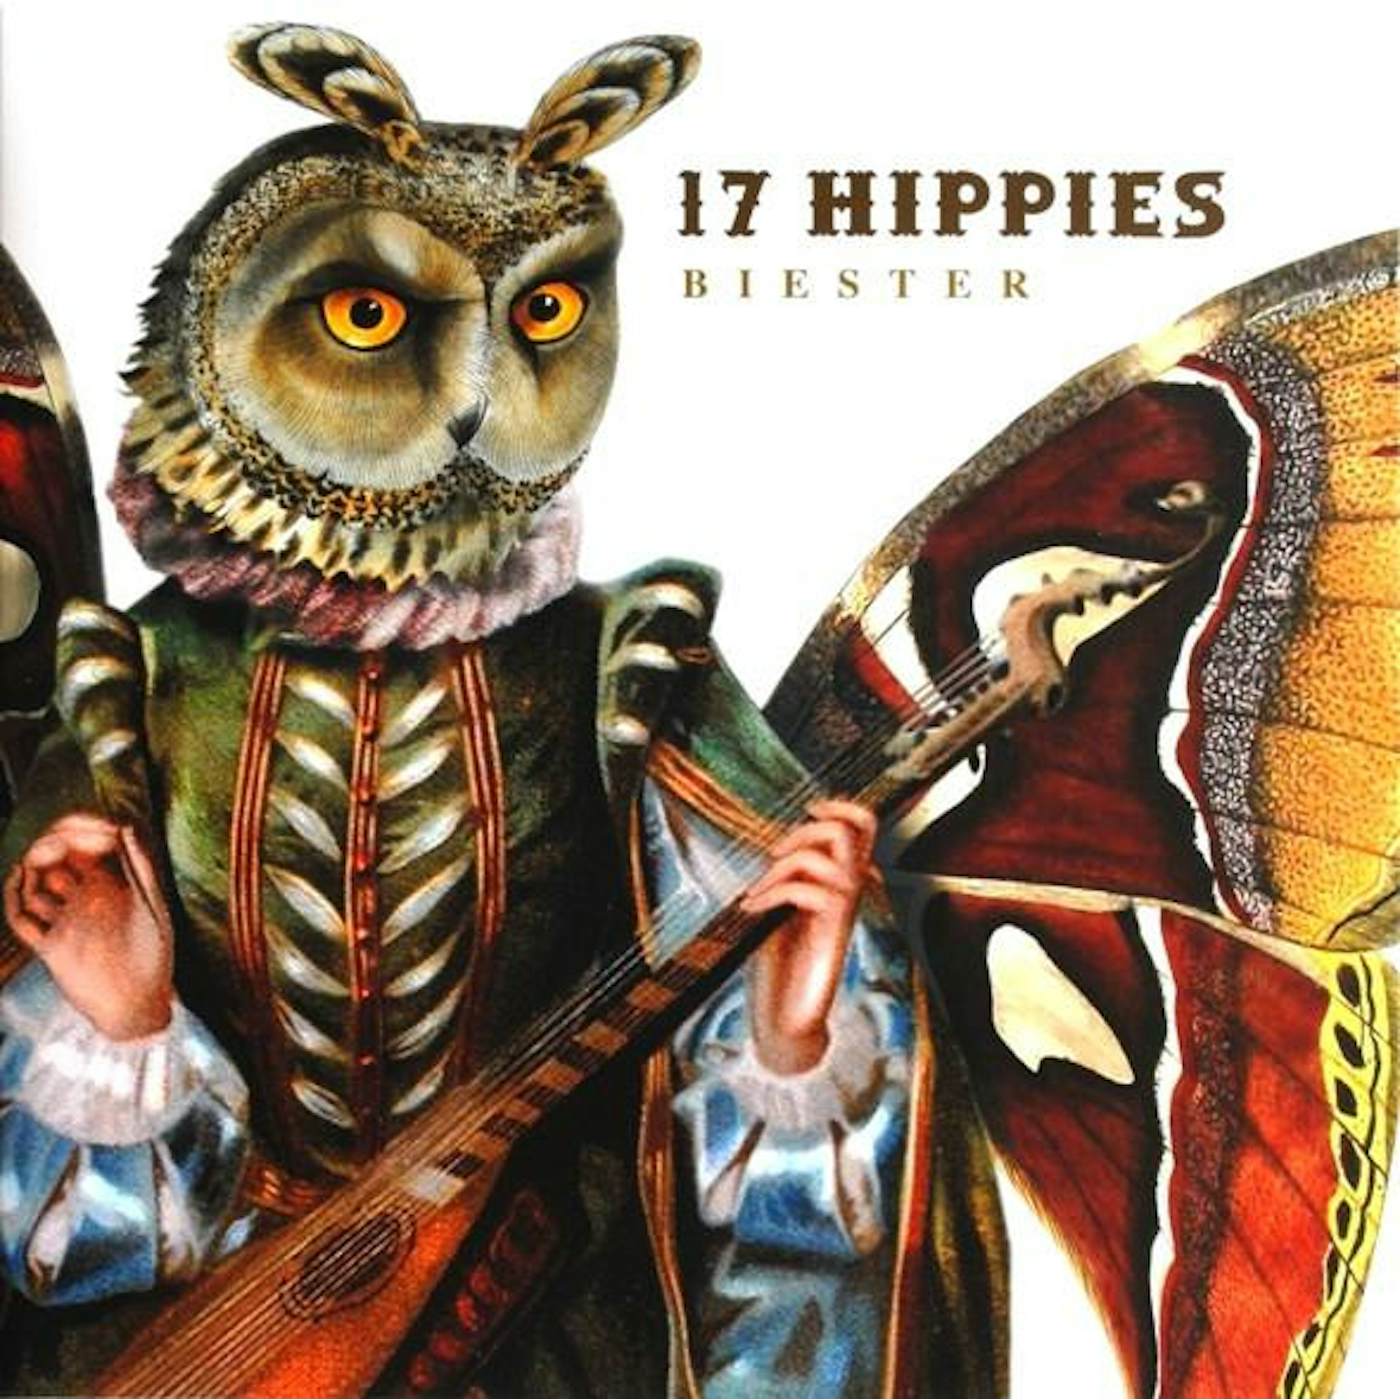 17 Hippies BIESTER (180G/GATEFOLD) Vinyl Record